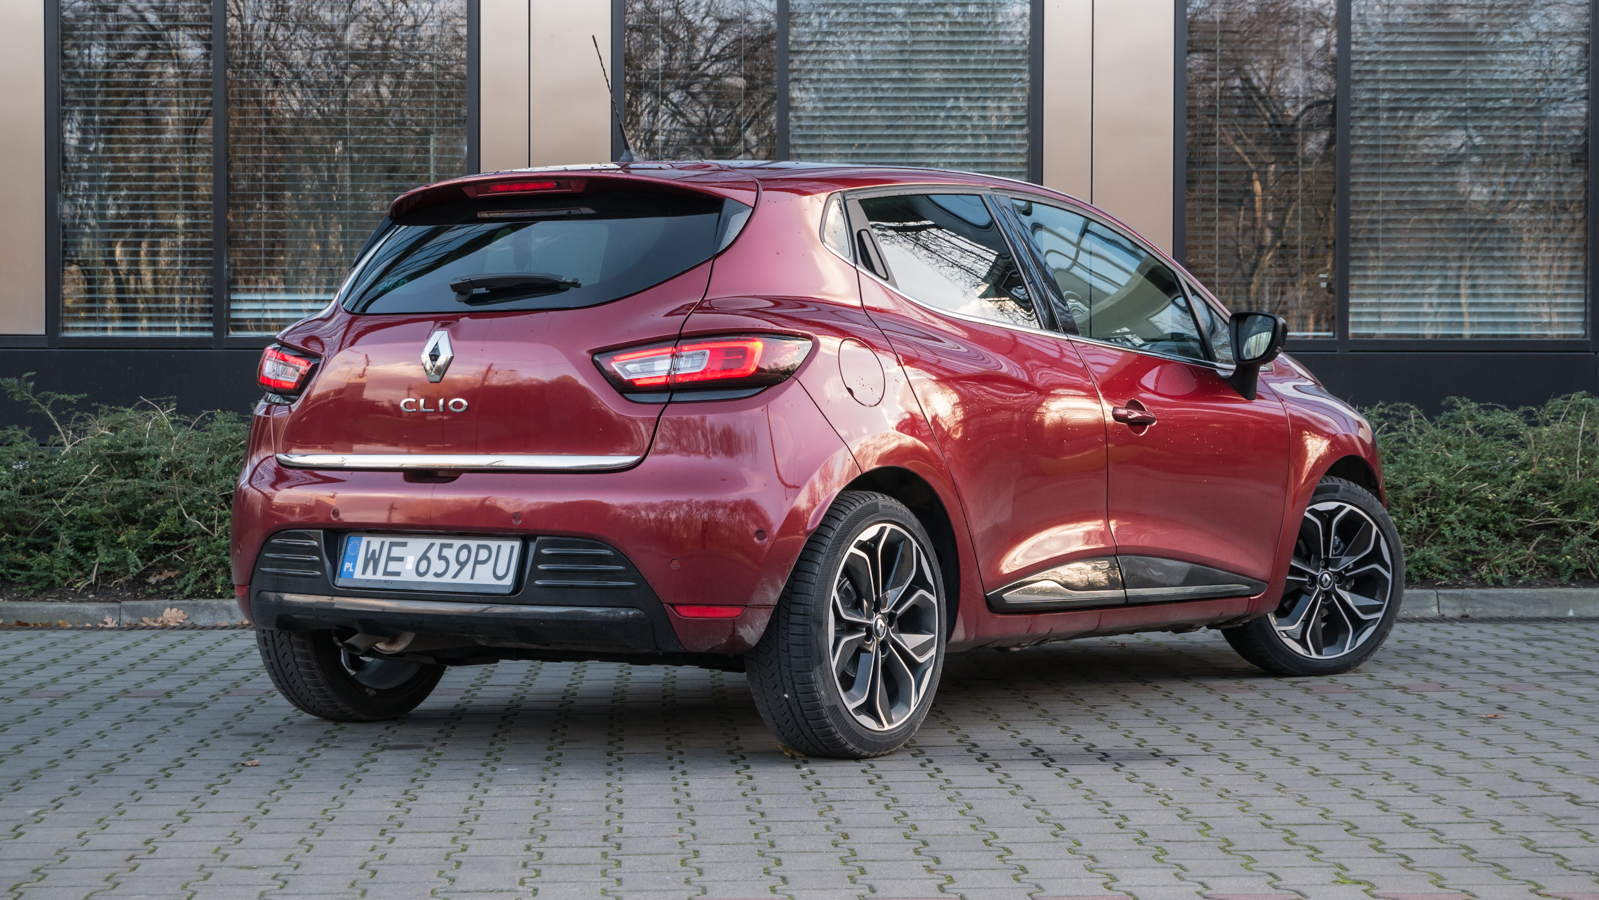 Test Renault Clio Intens 1.5 dCi 110 KM Infor.pl